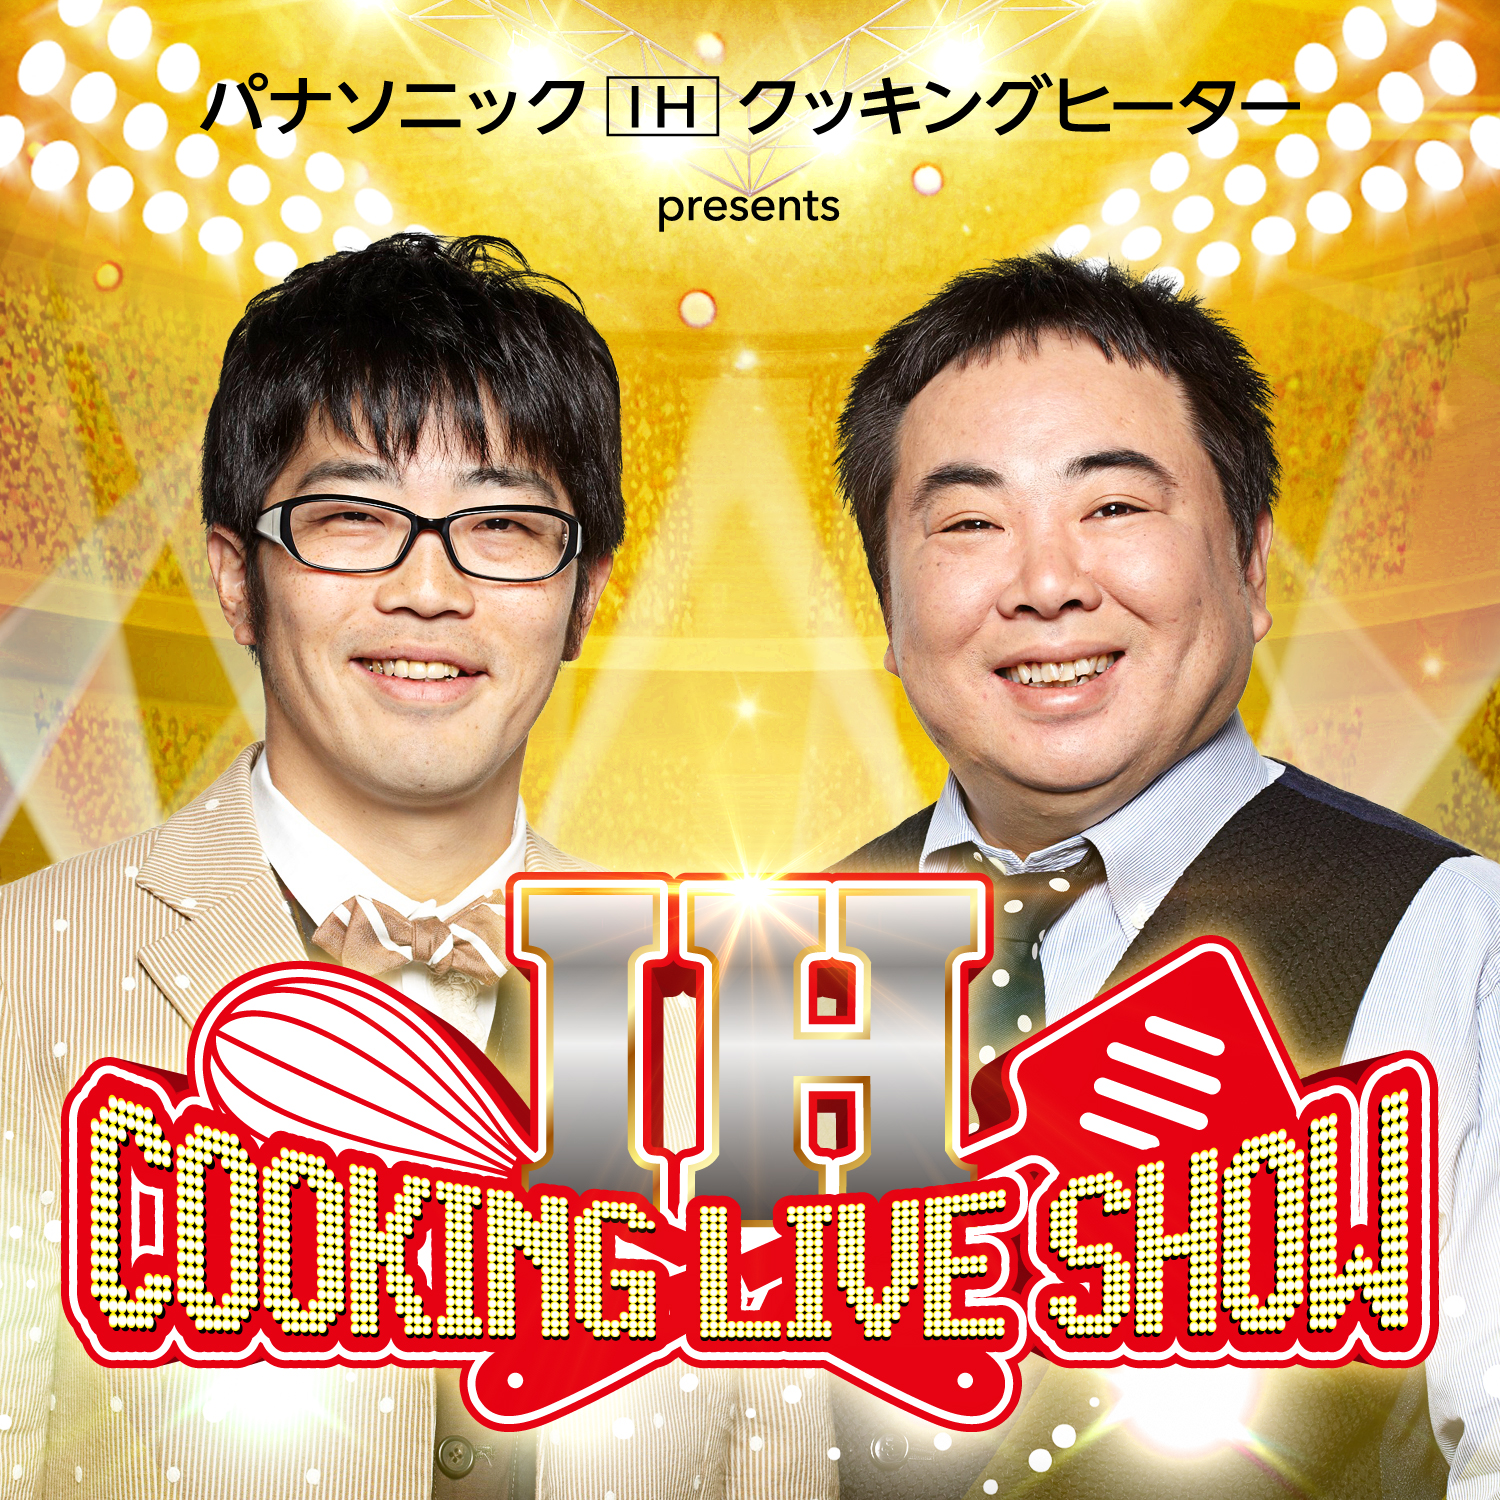 ep.0　6月8日(水)から配信スタート！『IH Cooking Live Show』